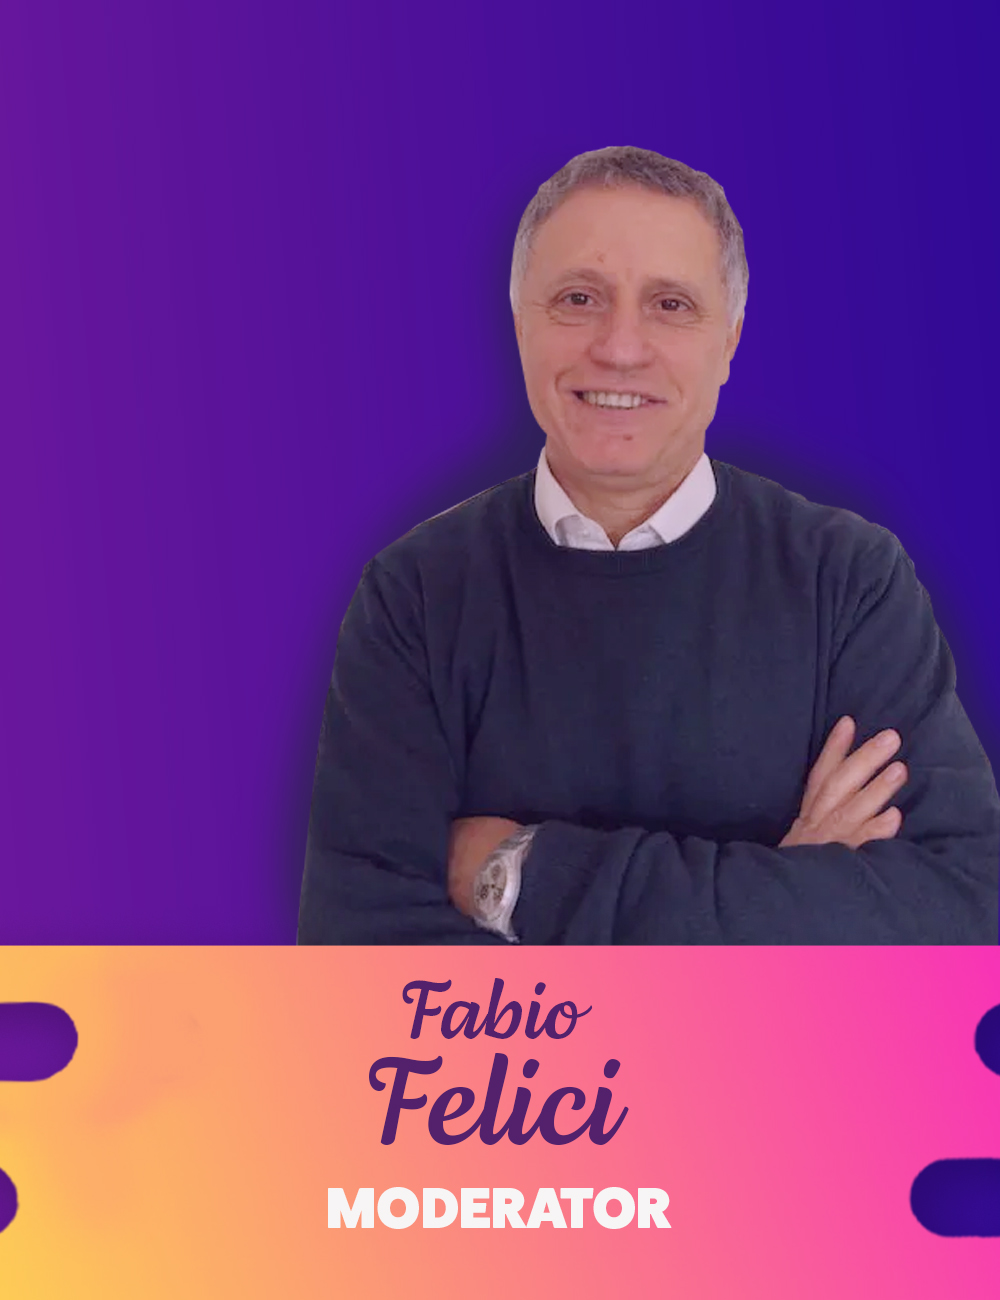 Fabio Felici moderator copia